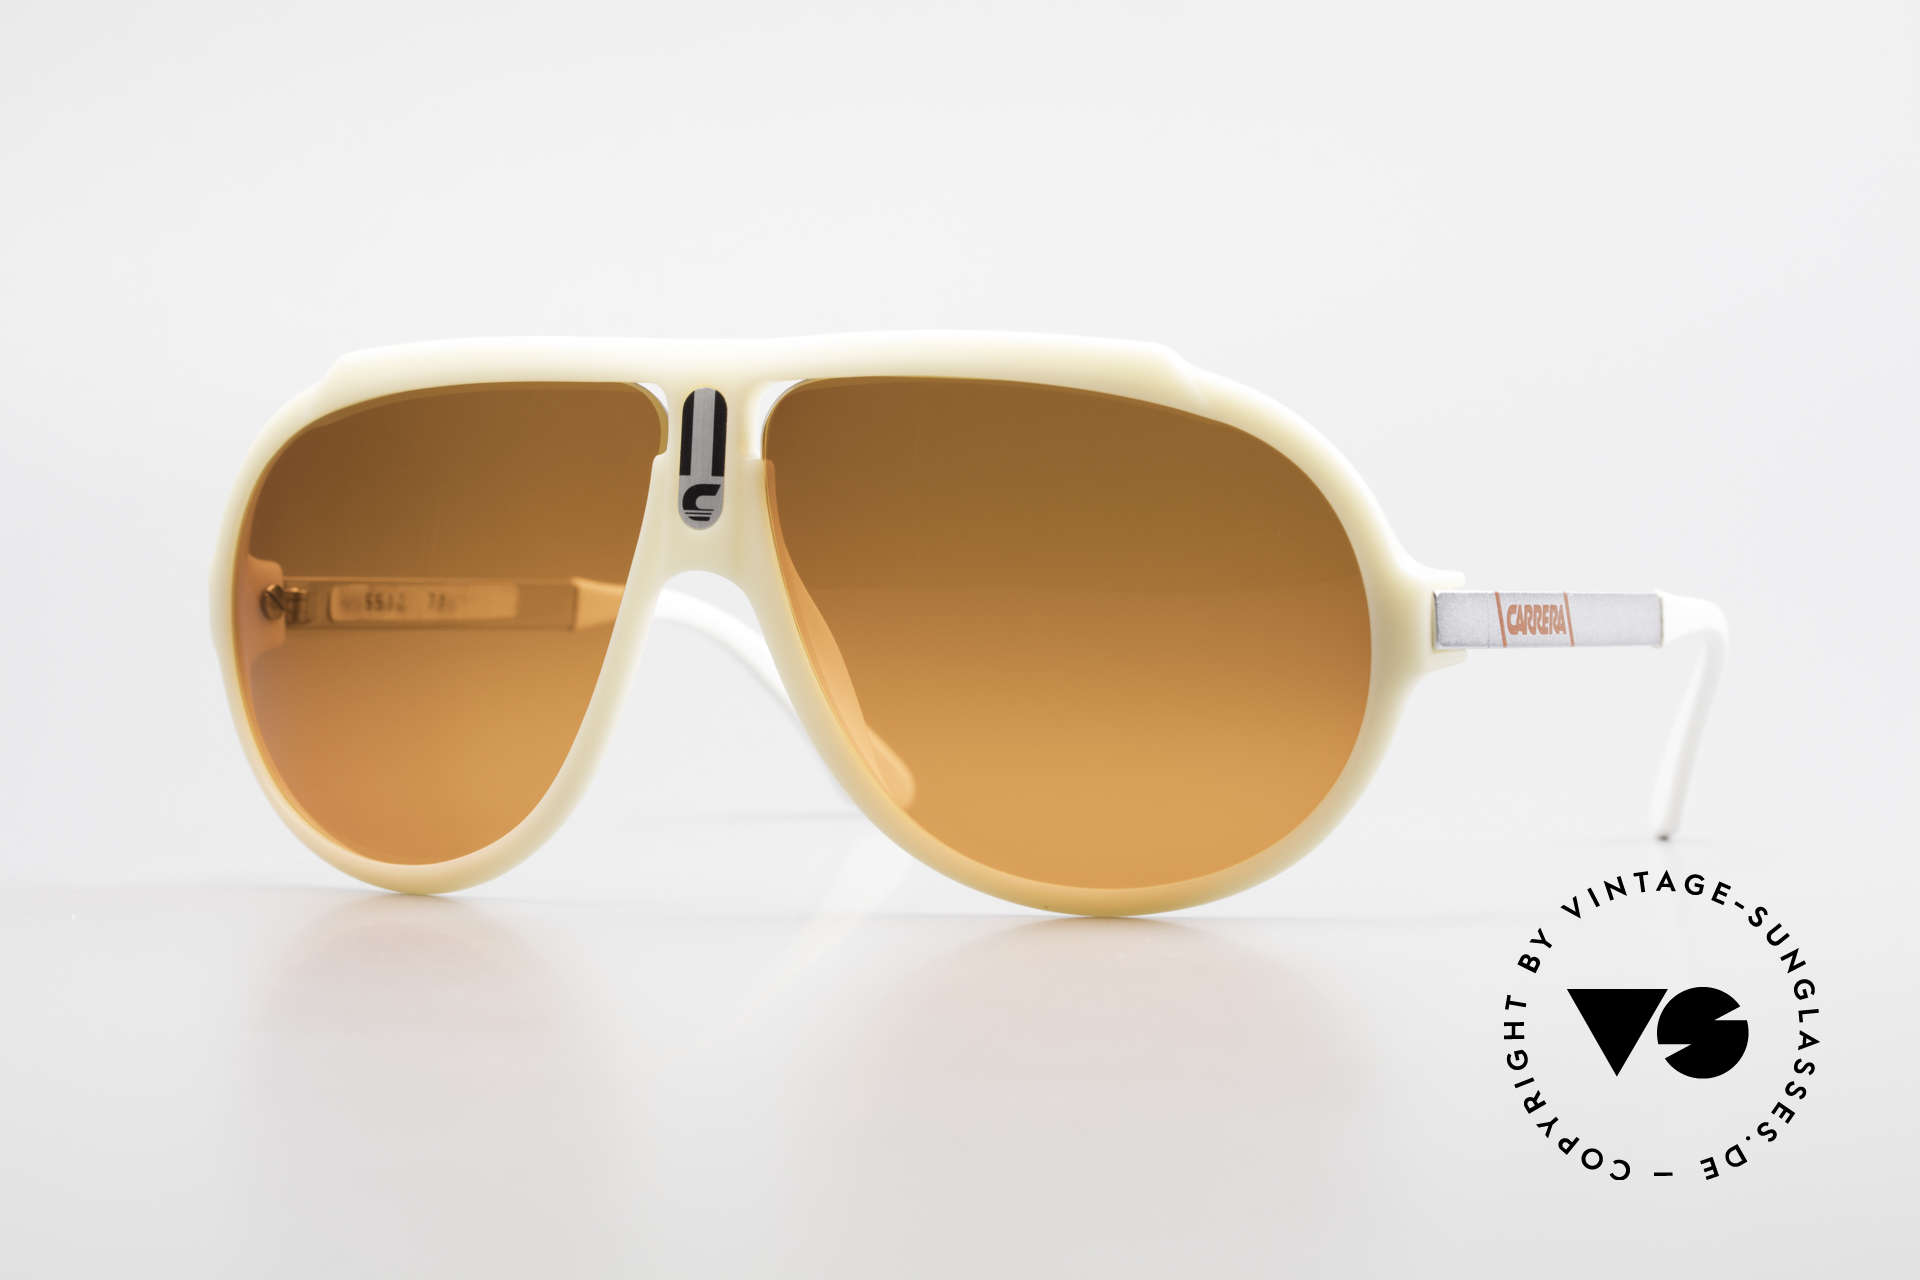 Carrera 5512 Miami Vice Sunset Sunglasses, legendary 1980's vintage CARRERA designer sunglasses, Made for Men